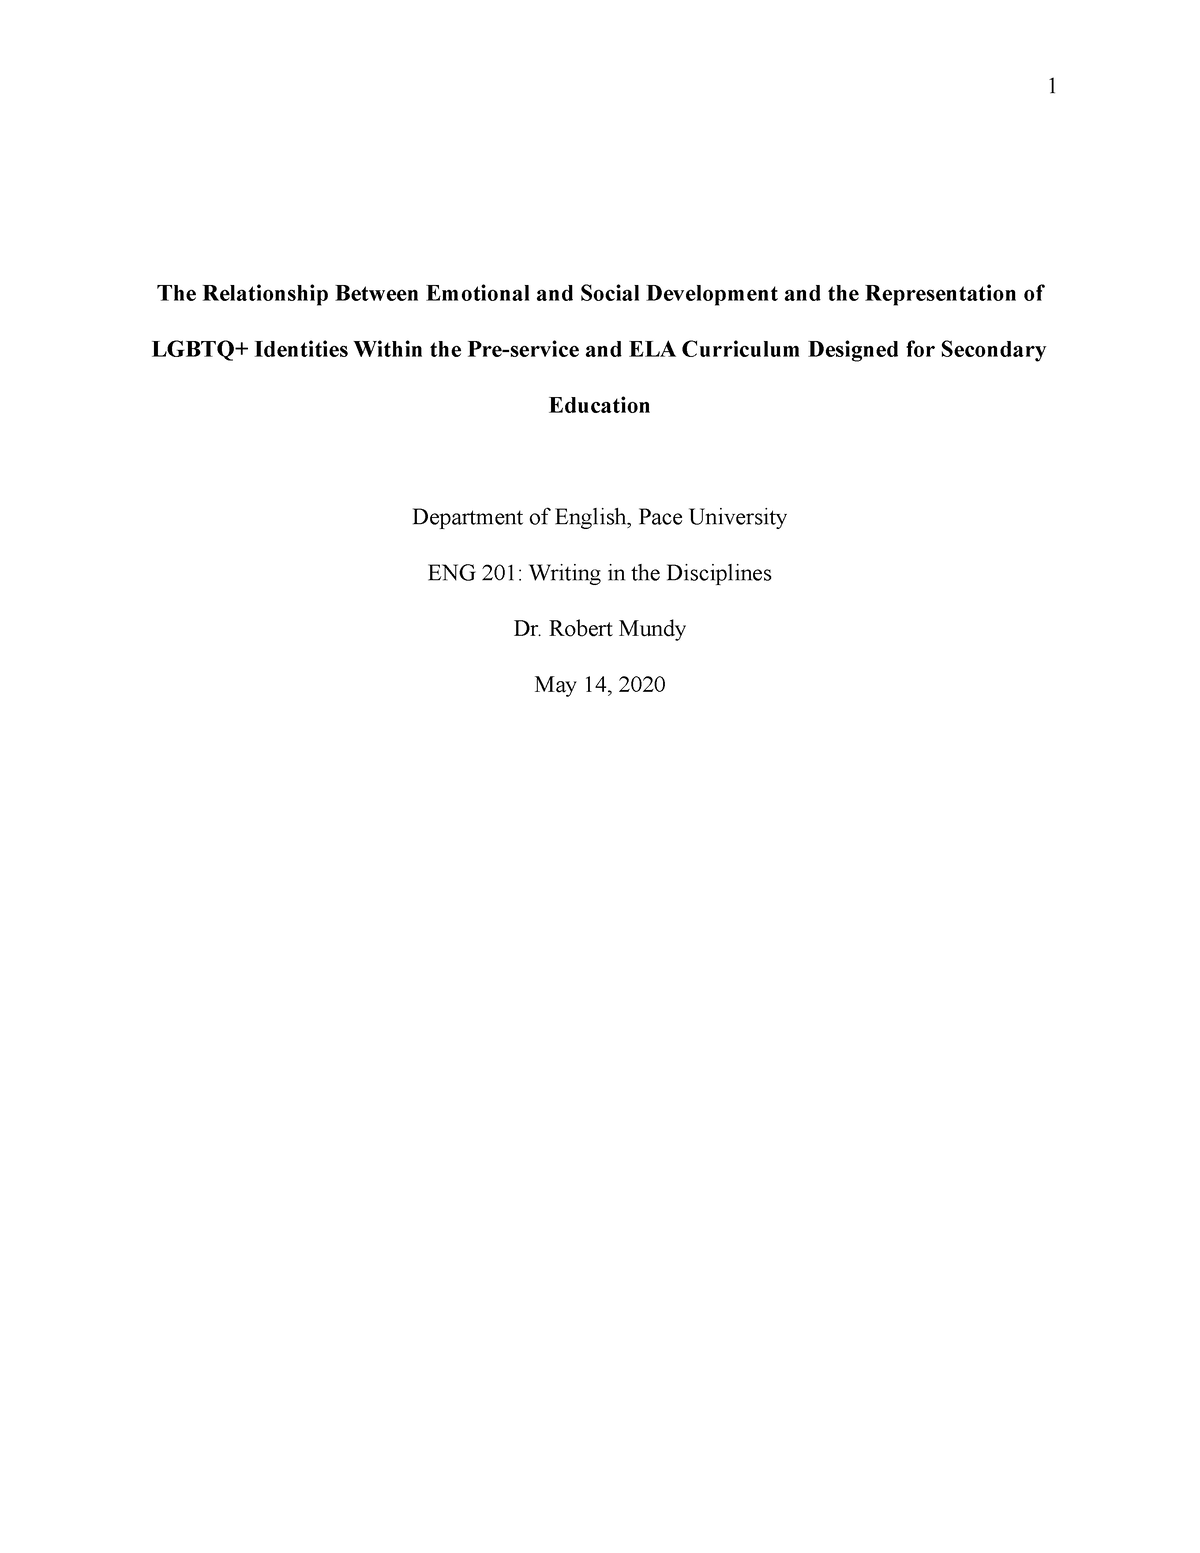 emotional development research paper